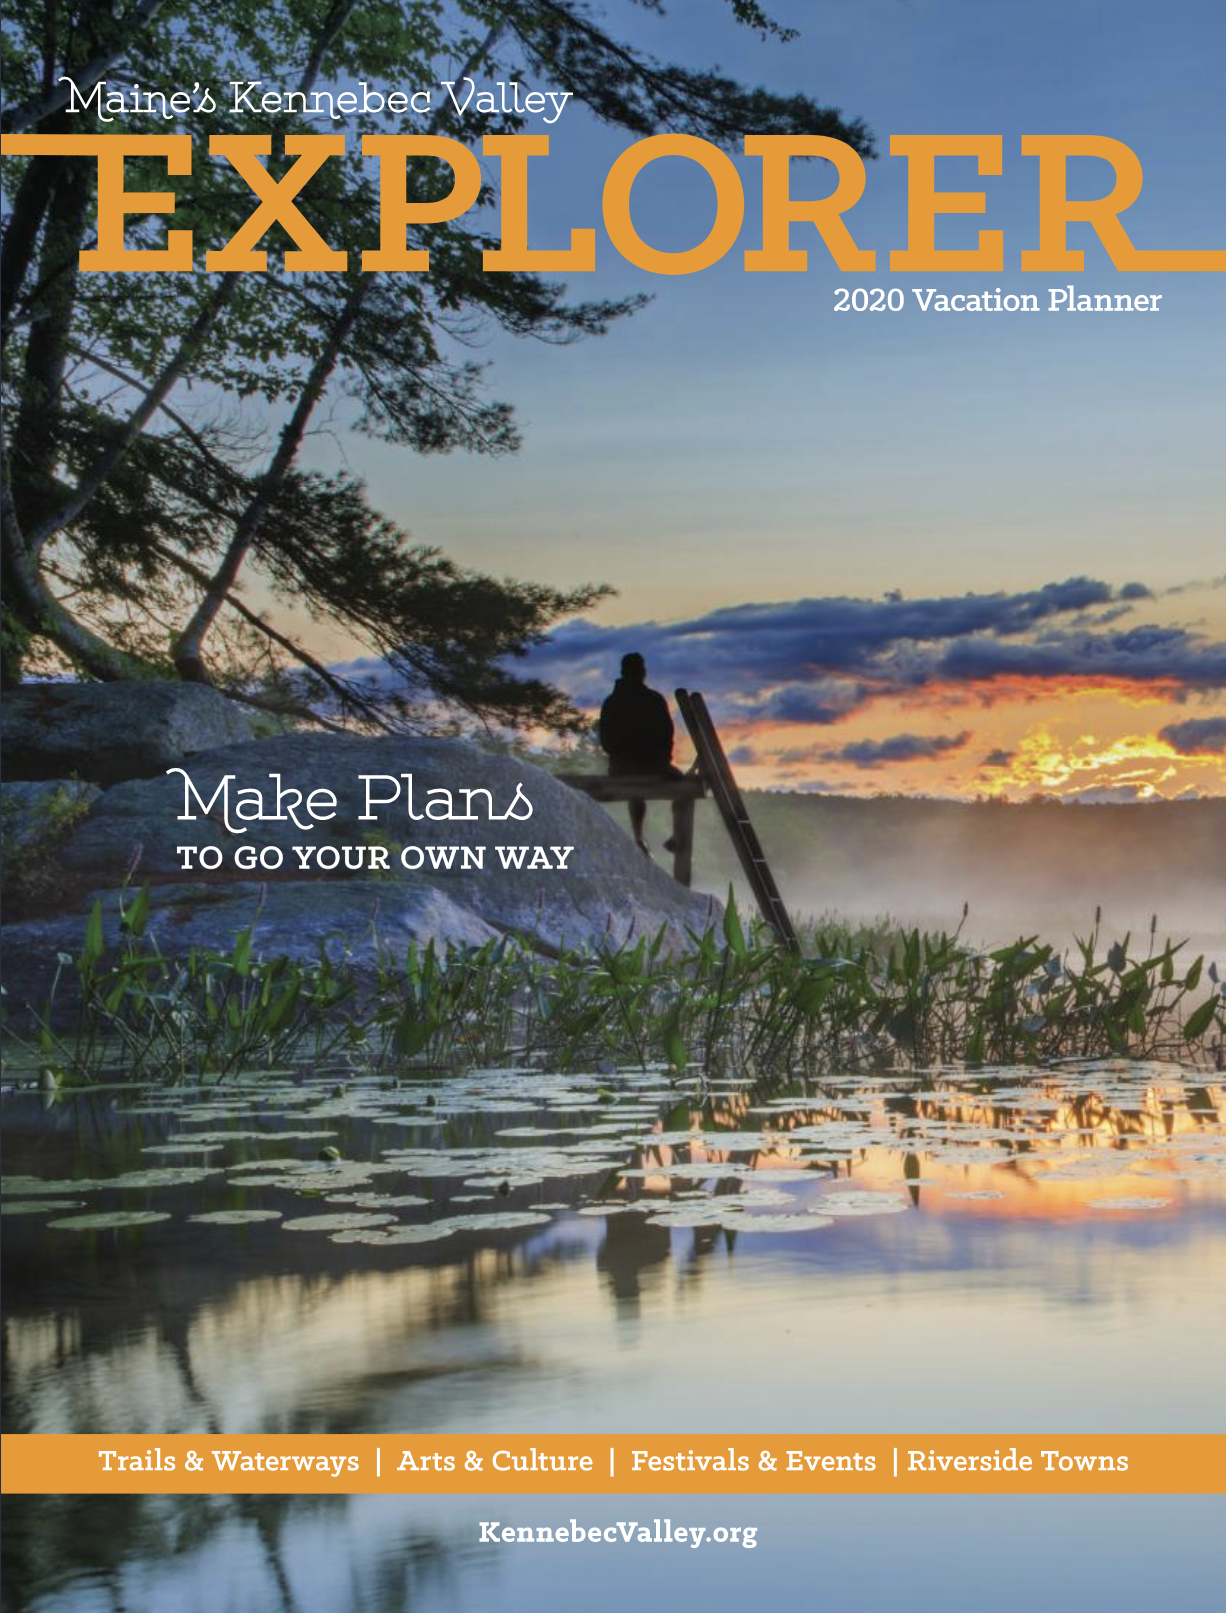 Kennebec Valley Explorer Cover 2020